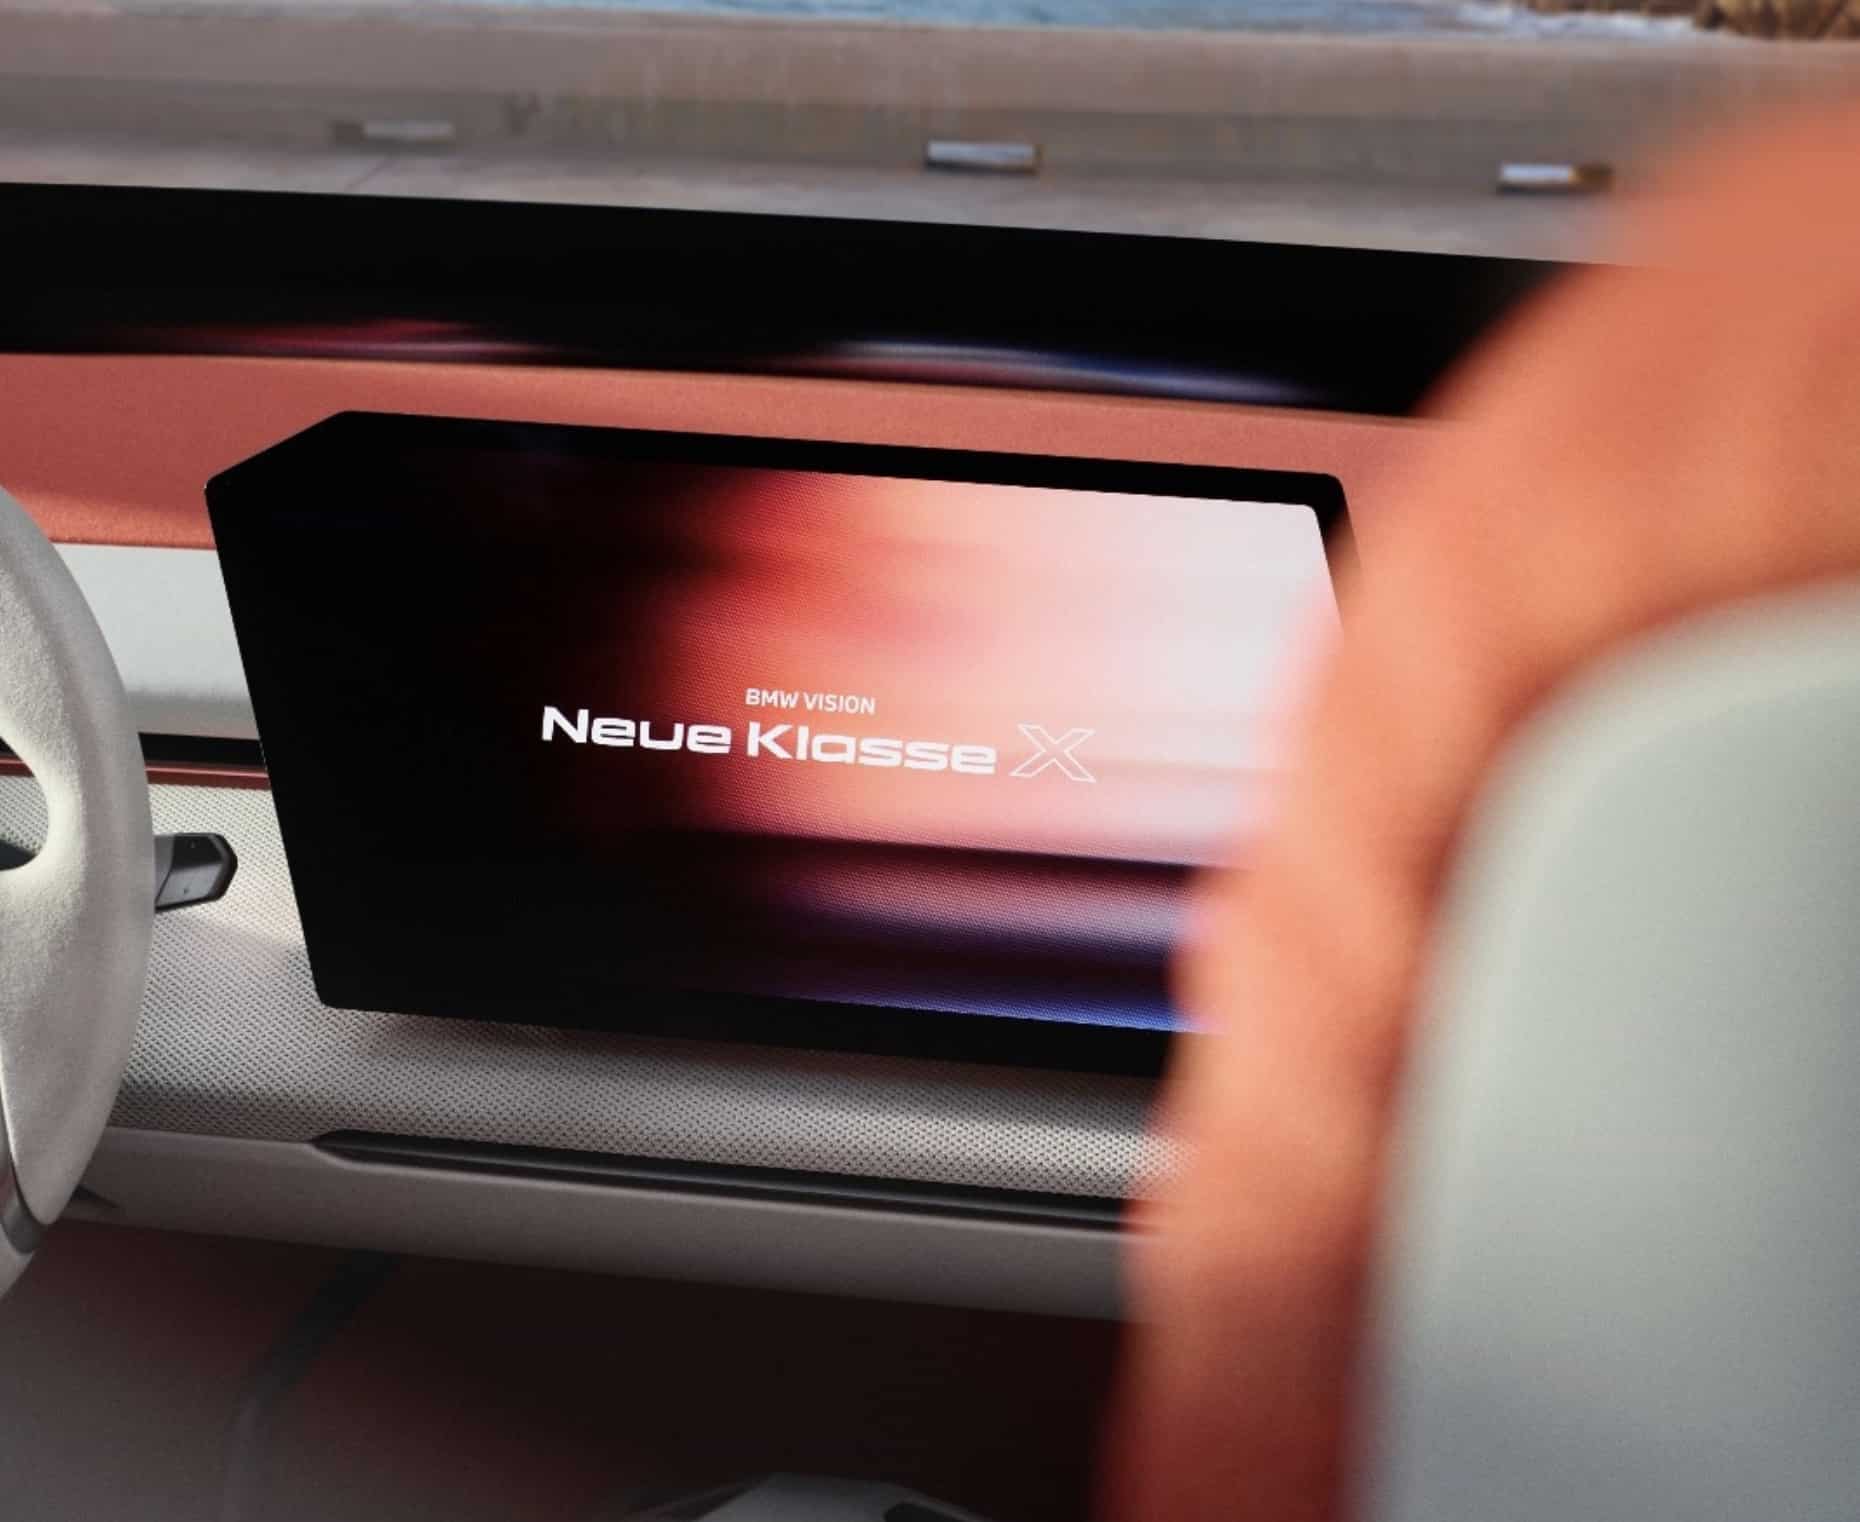 BMW Vision Neue Klasse X : bientôt un avant-goût du futur iX3